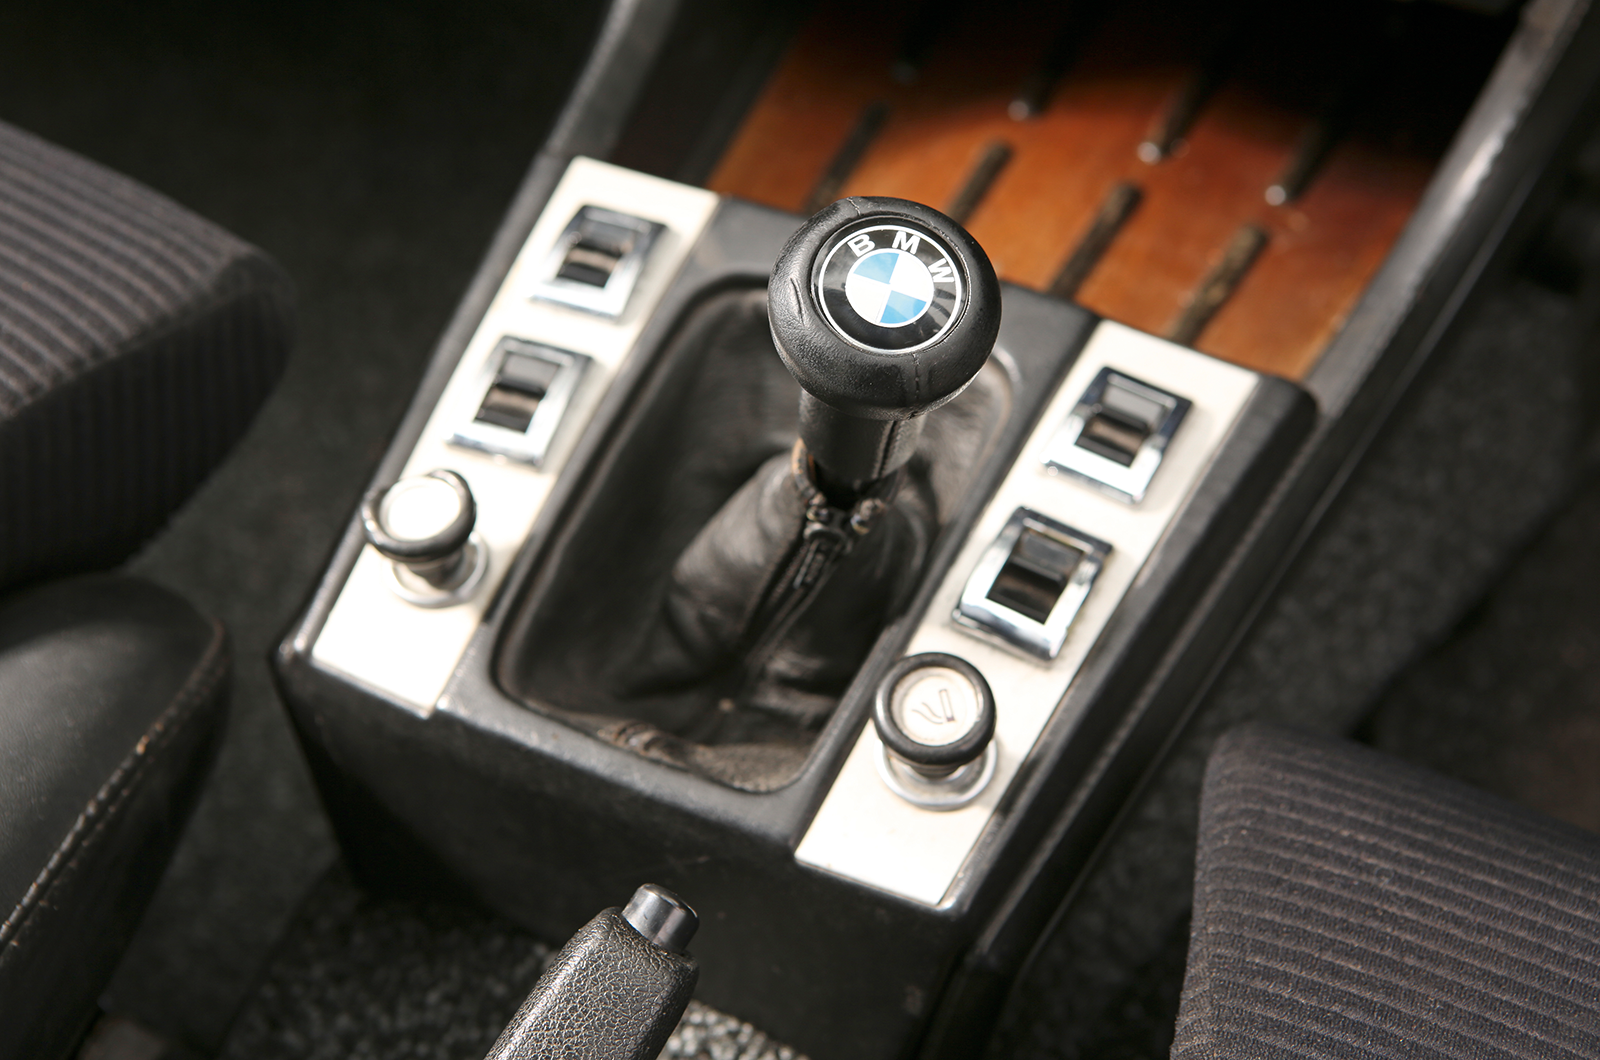 Classic & Sports Car – Buyer’s guide: BMW E9 coupés